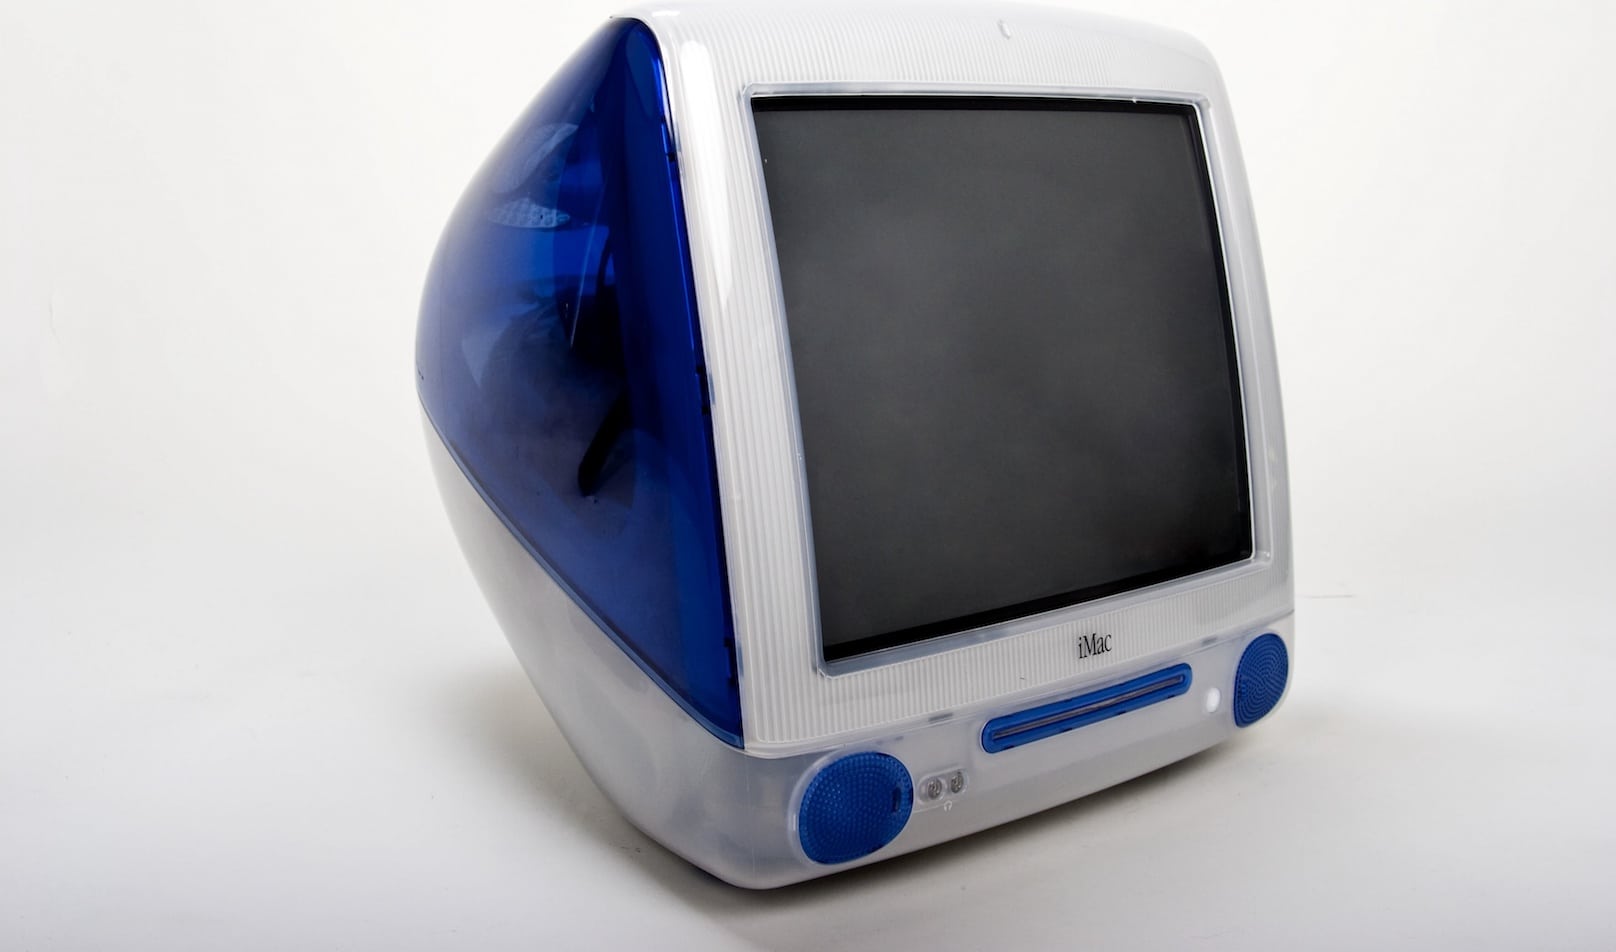 iMac celebrates its 20th birthday